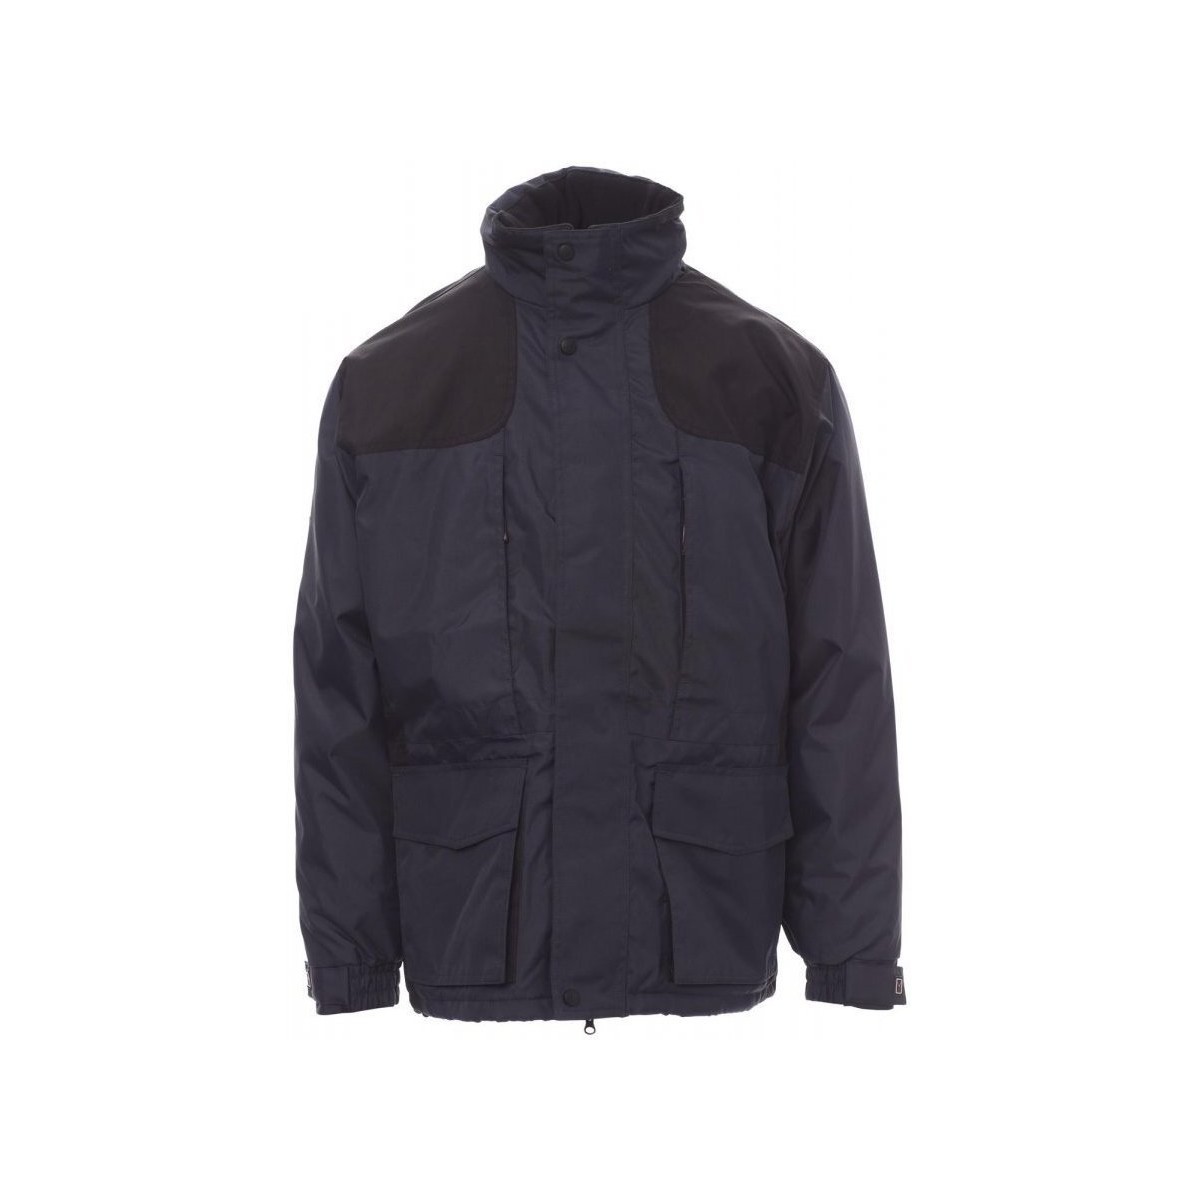 Textiel Heren Jacks / Blazers Payper Wear Veste Payper Ski Blauw